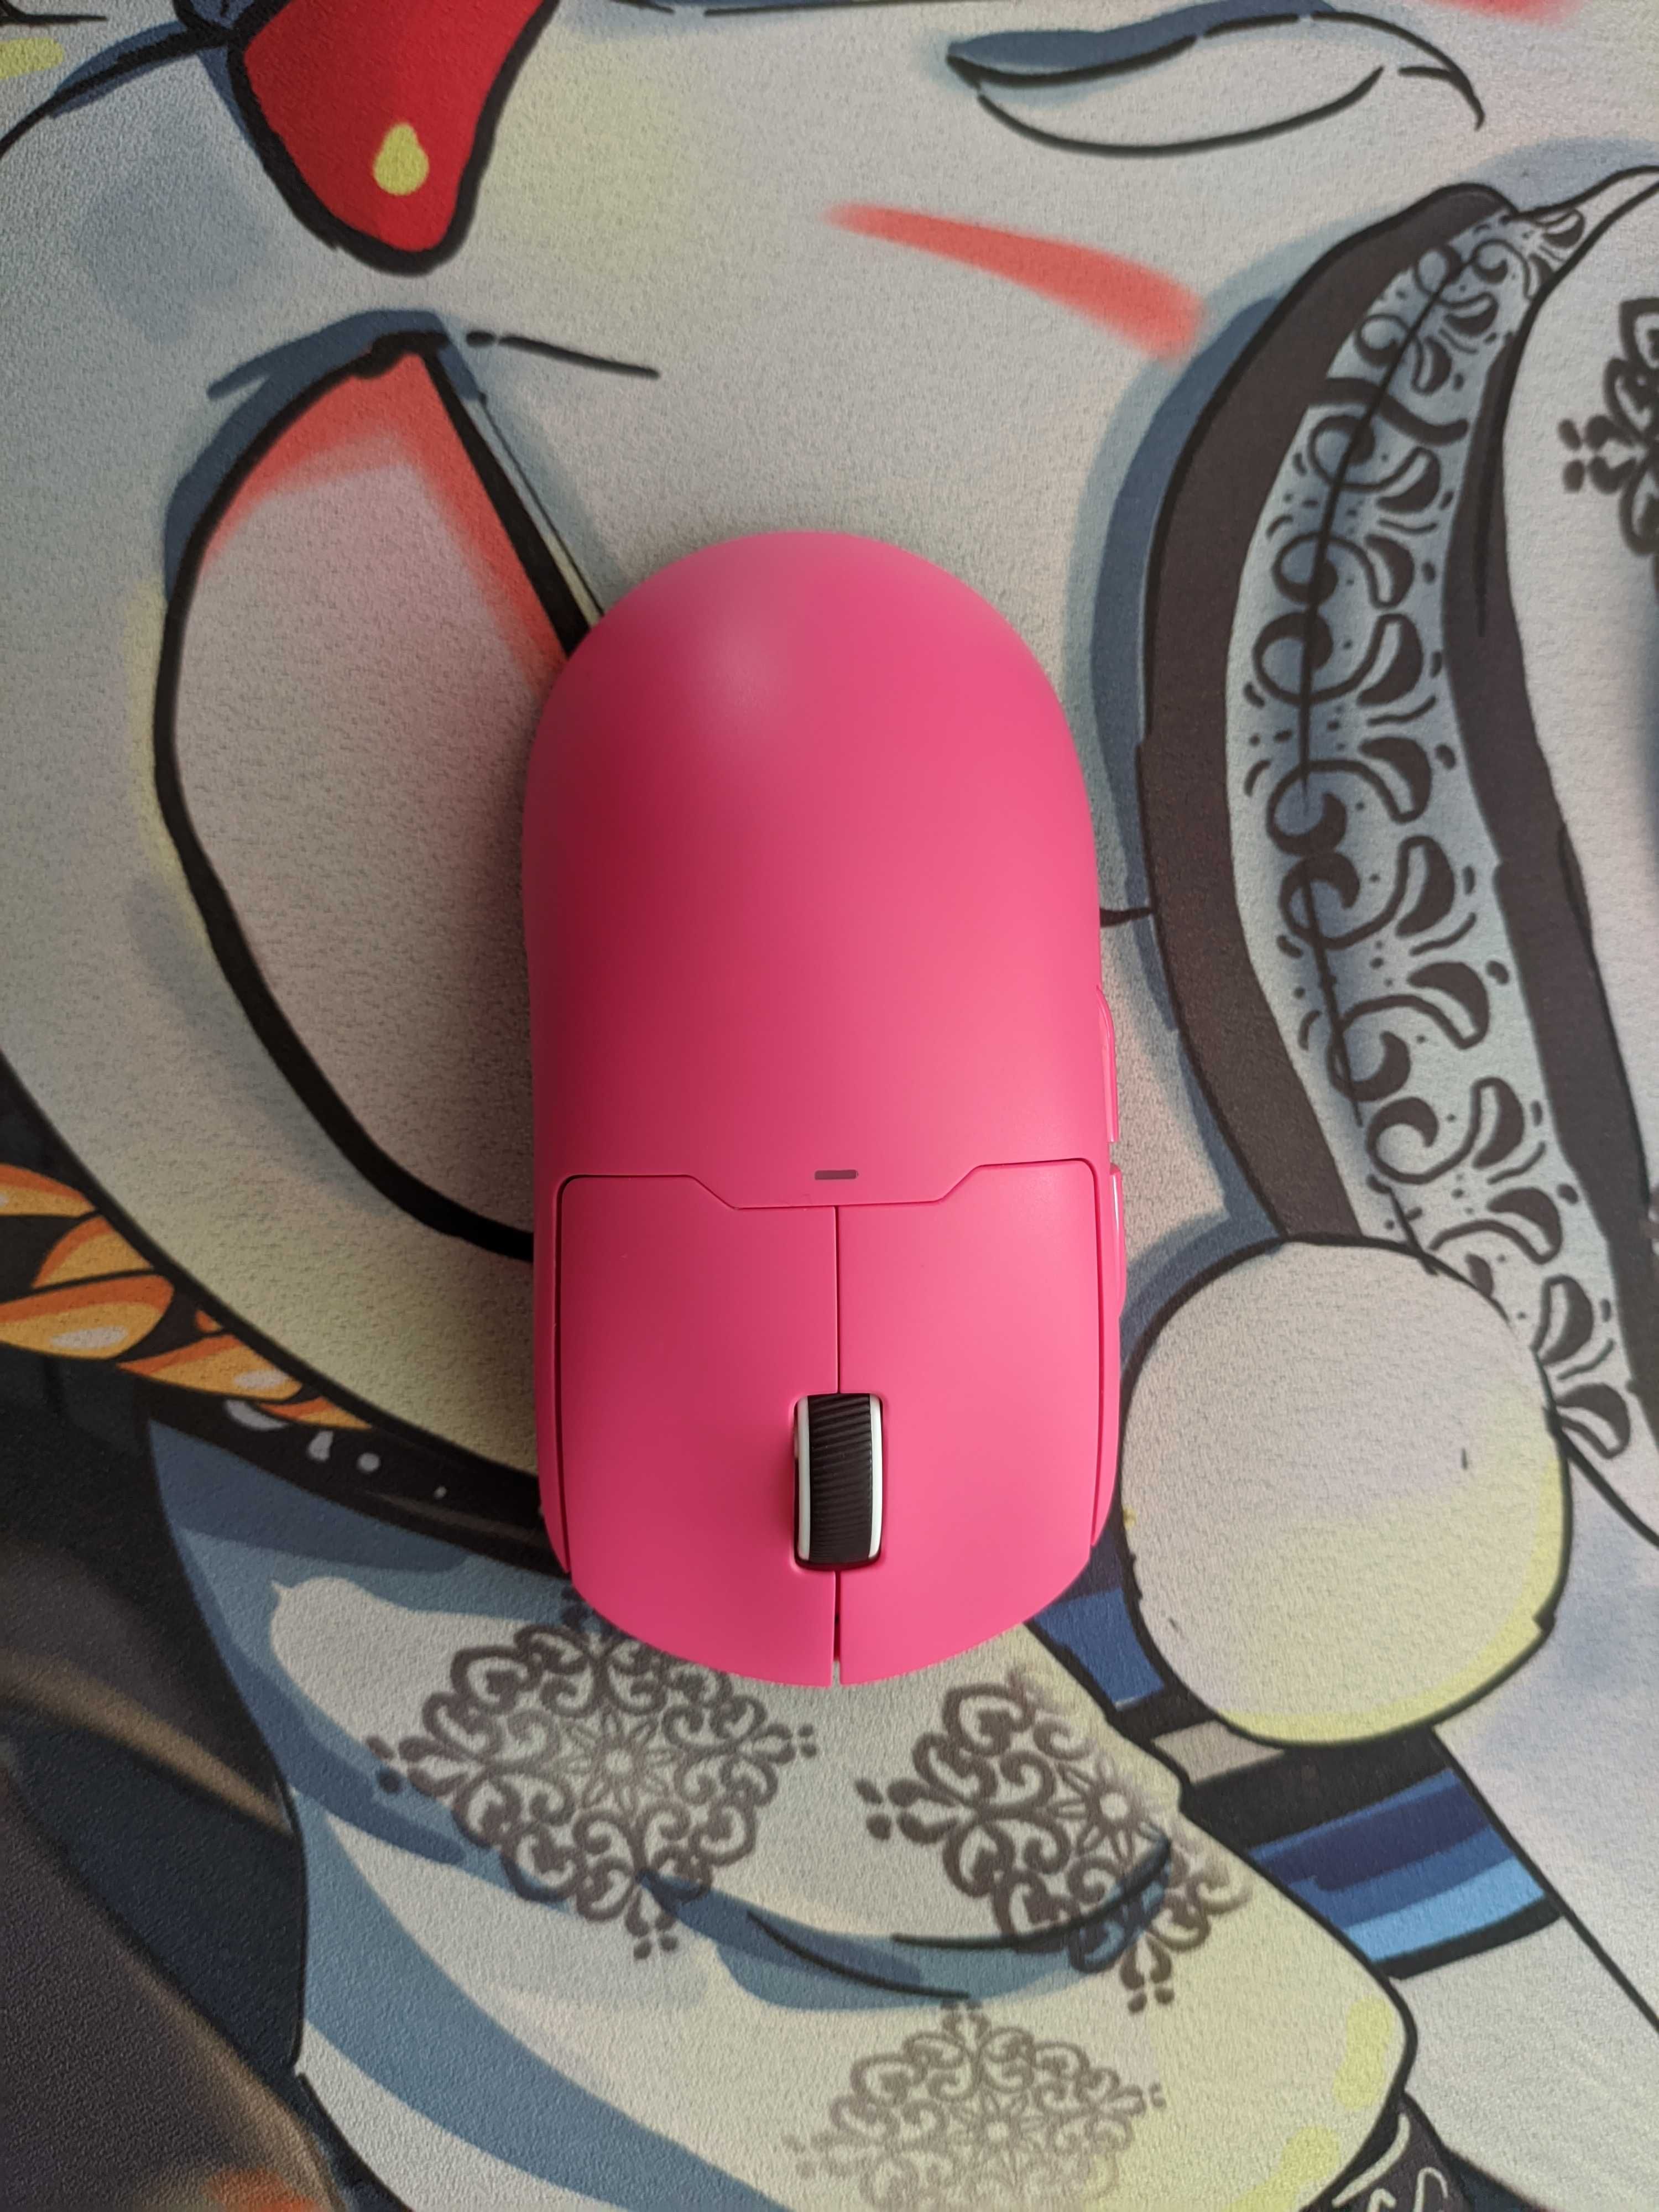 MCHOSE A5 Pro + 4K донгл. pink